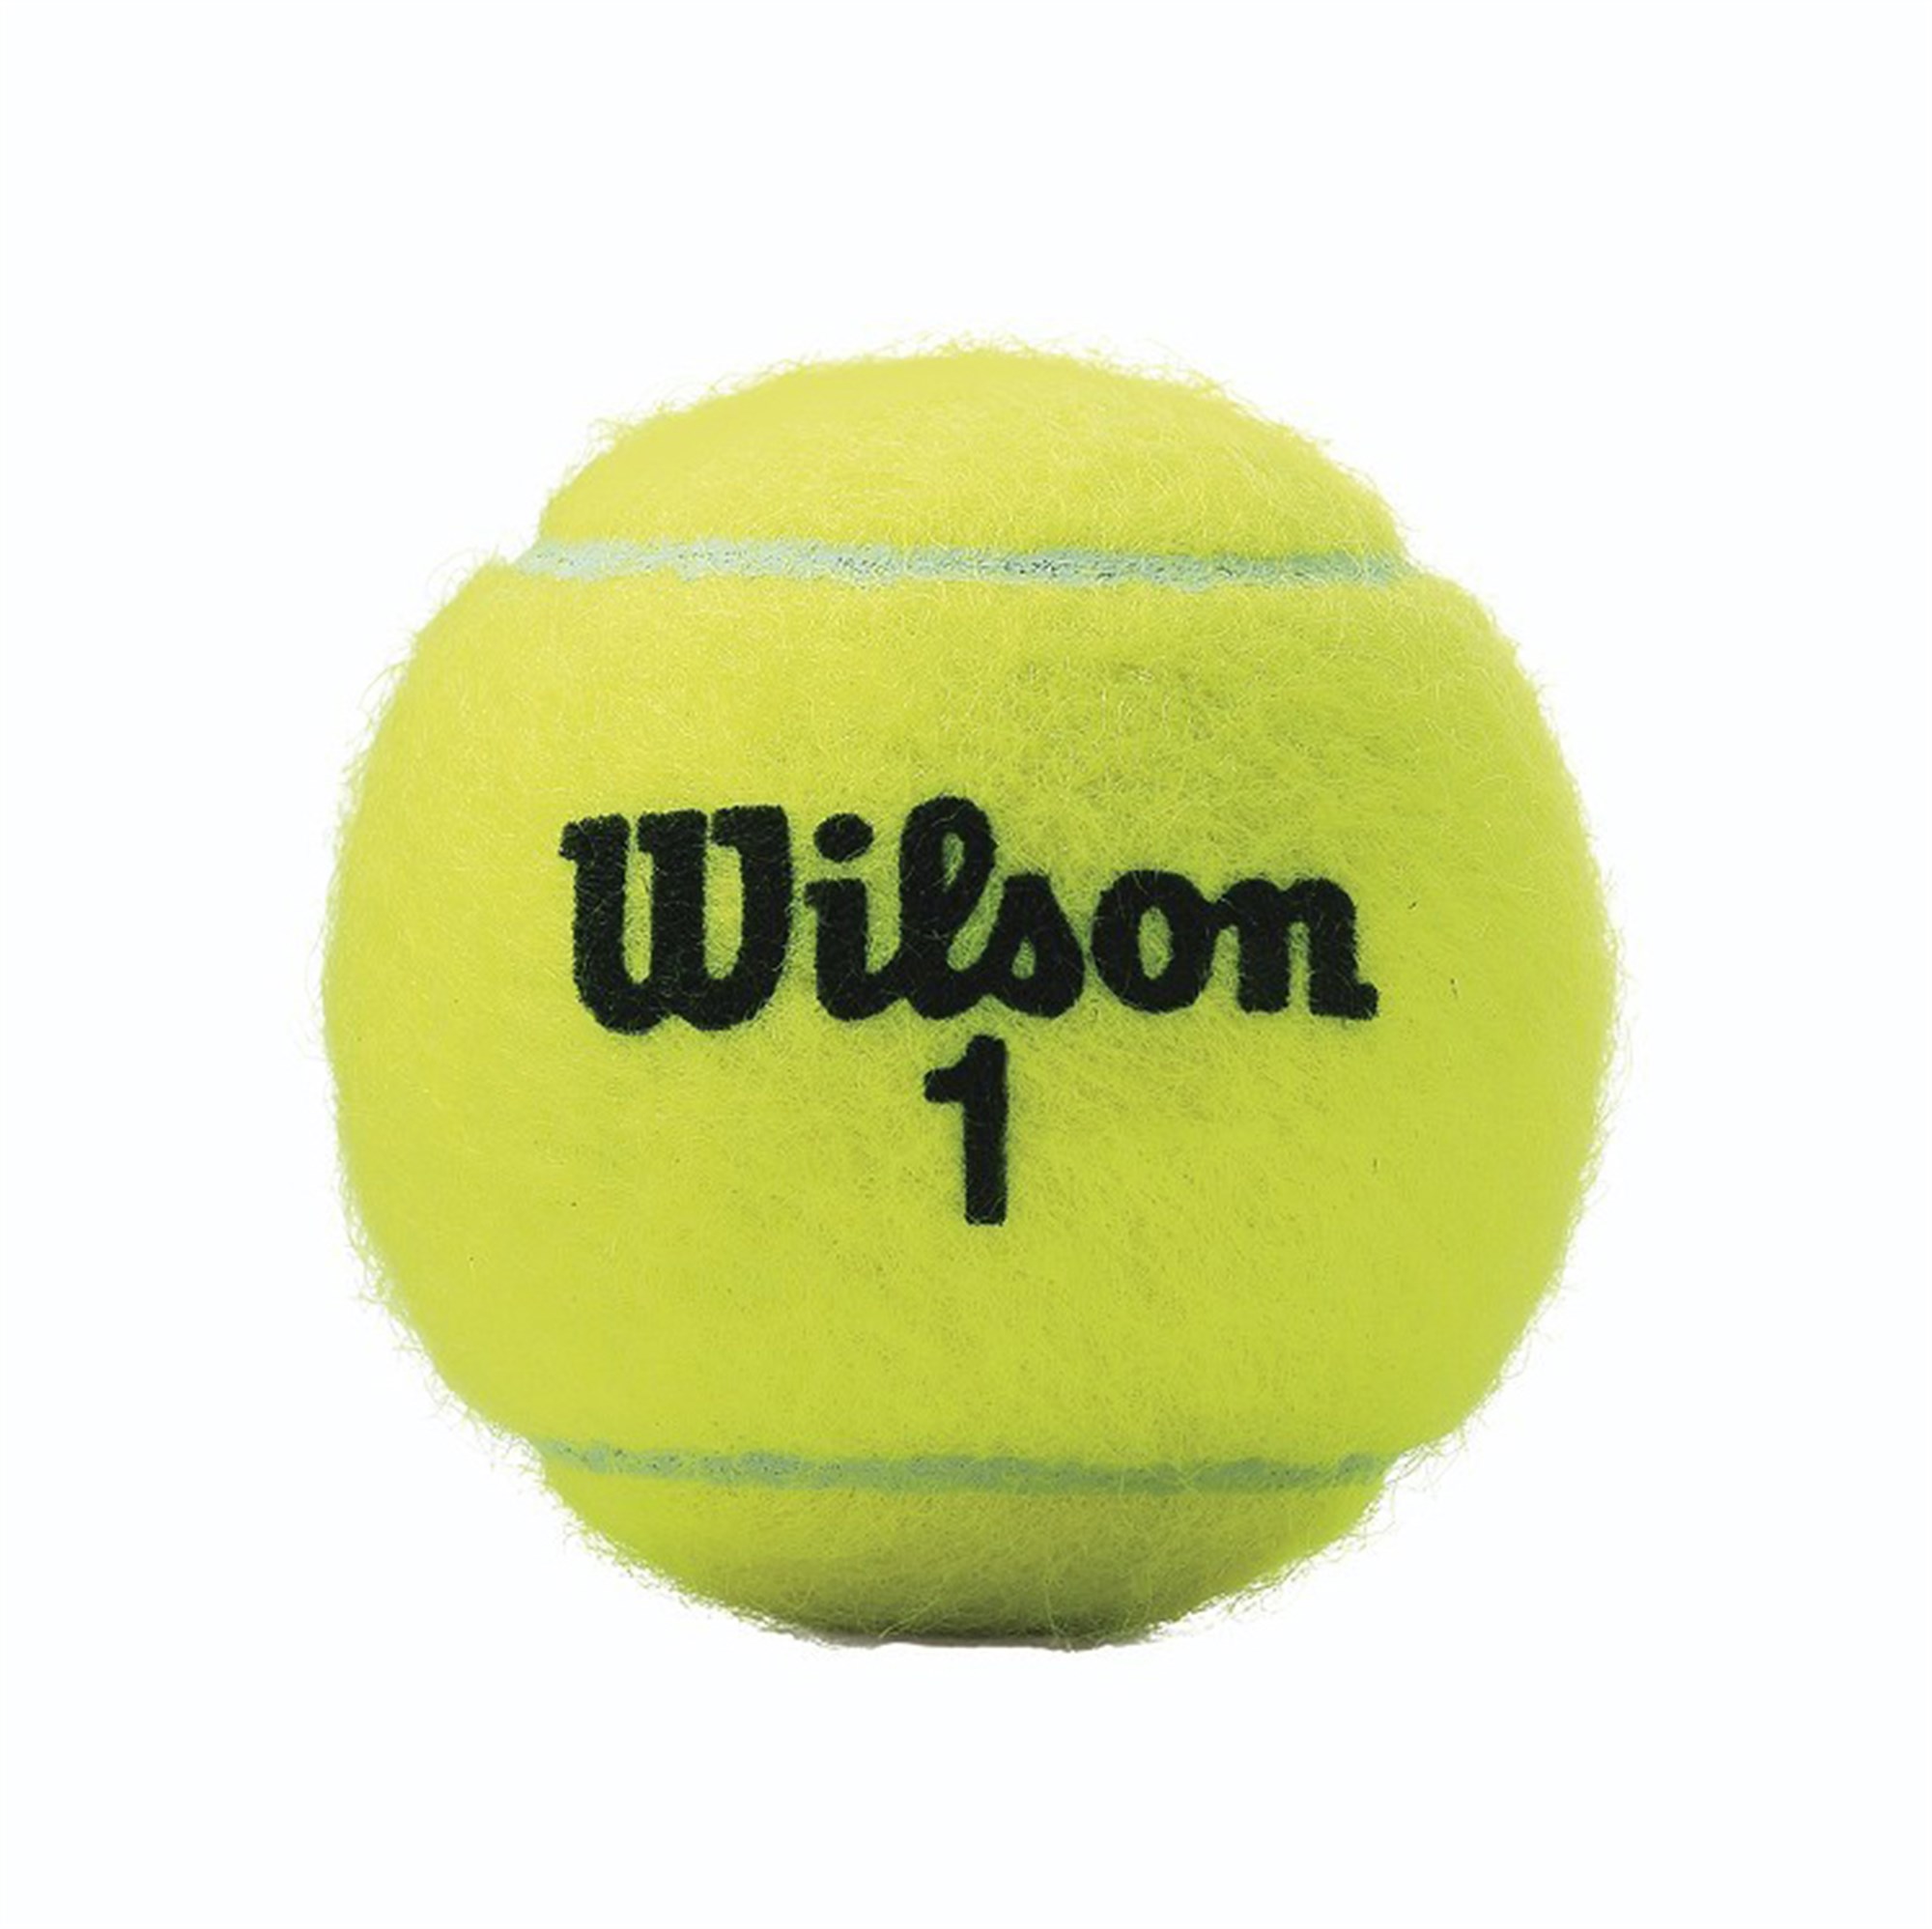 Wilson Championship 3'lü Tenis Topu Ürün kodu 0T1001 Etichet Sport